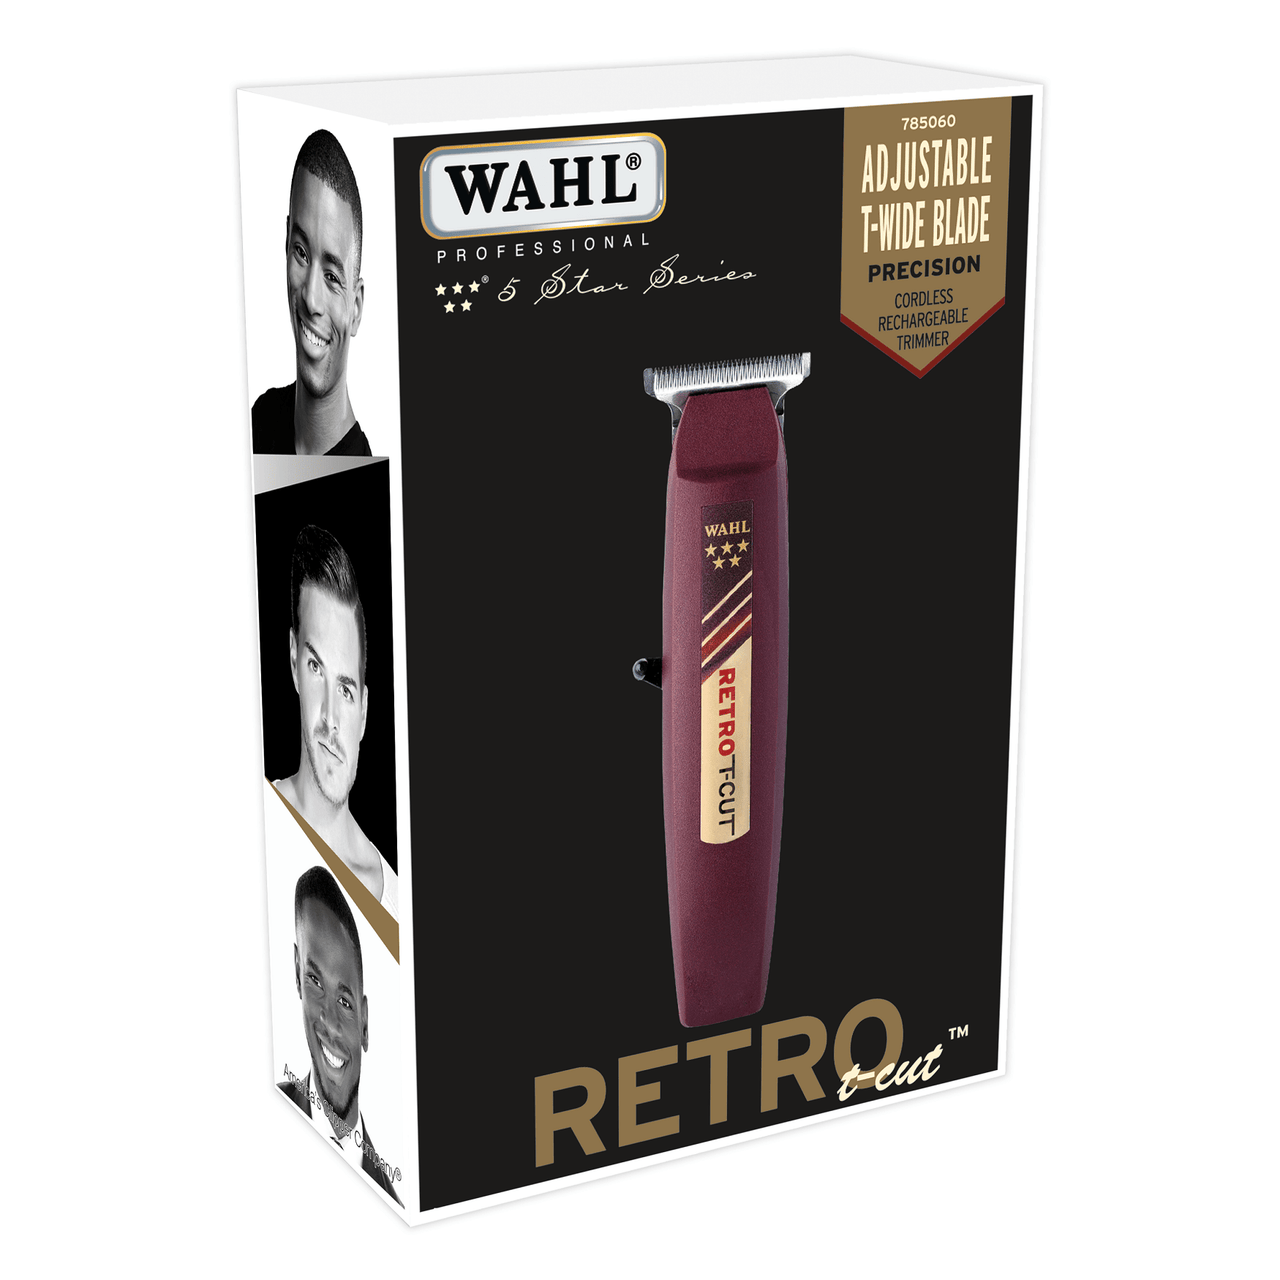 WAHL PROFESSIONAL_Retro T-Cut 5 star series_Cosmetic World